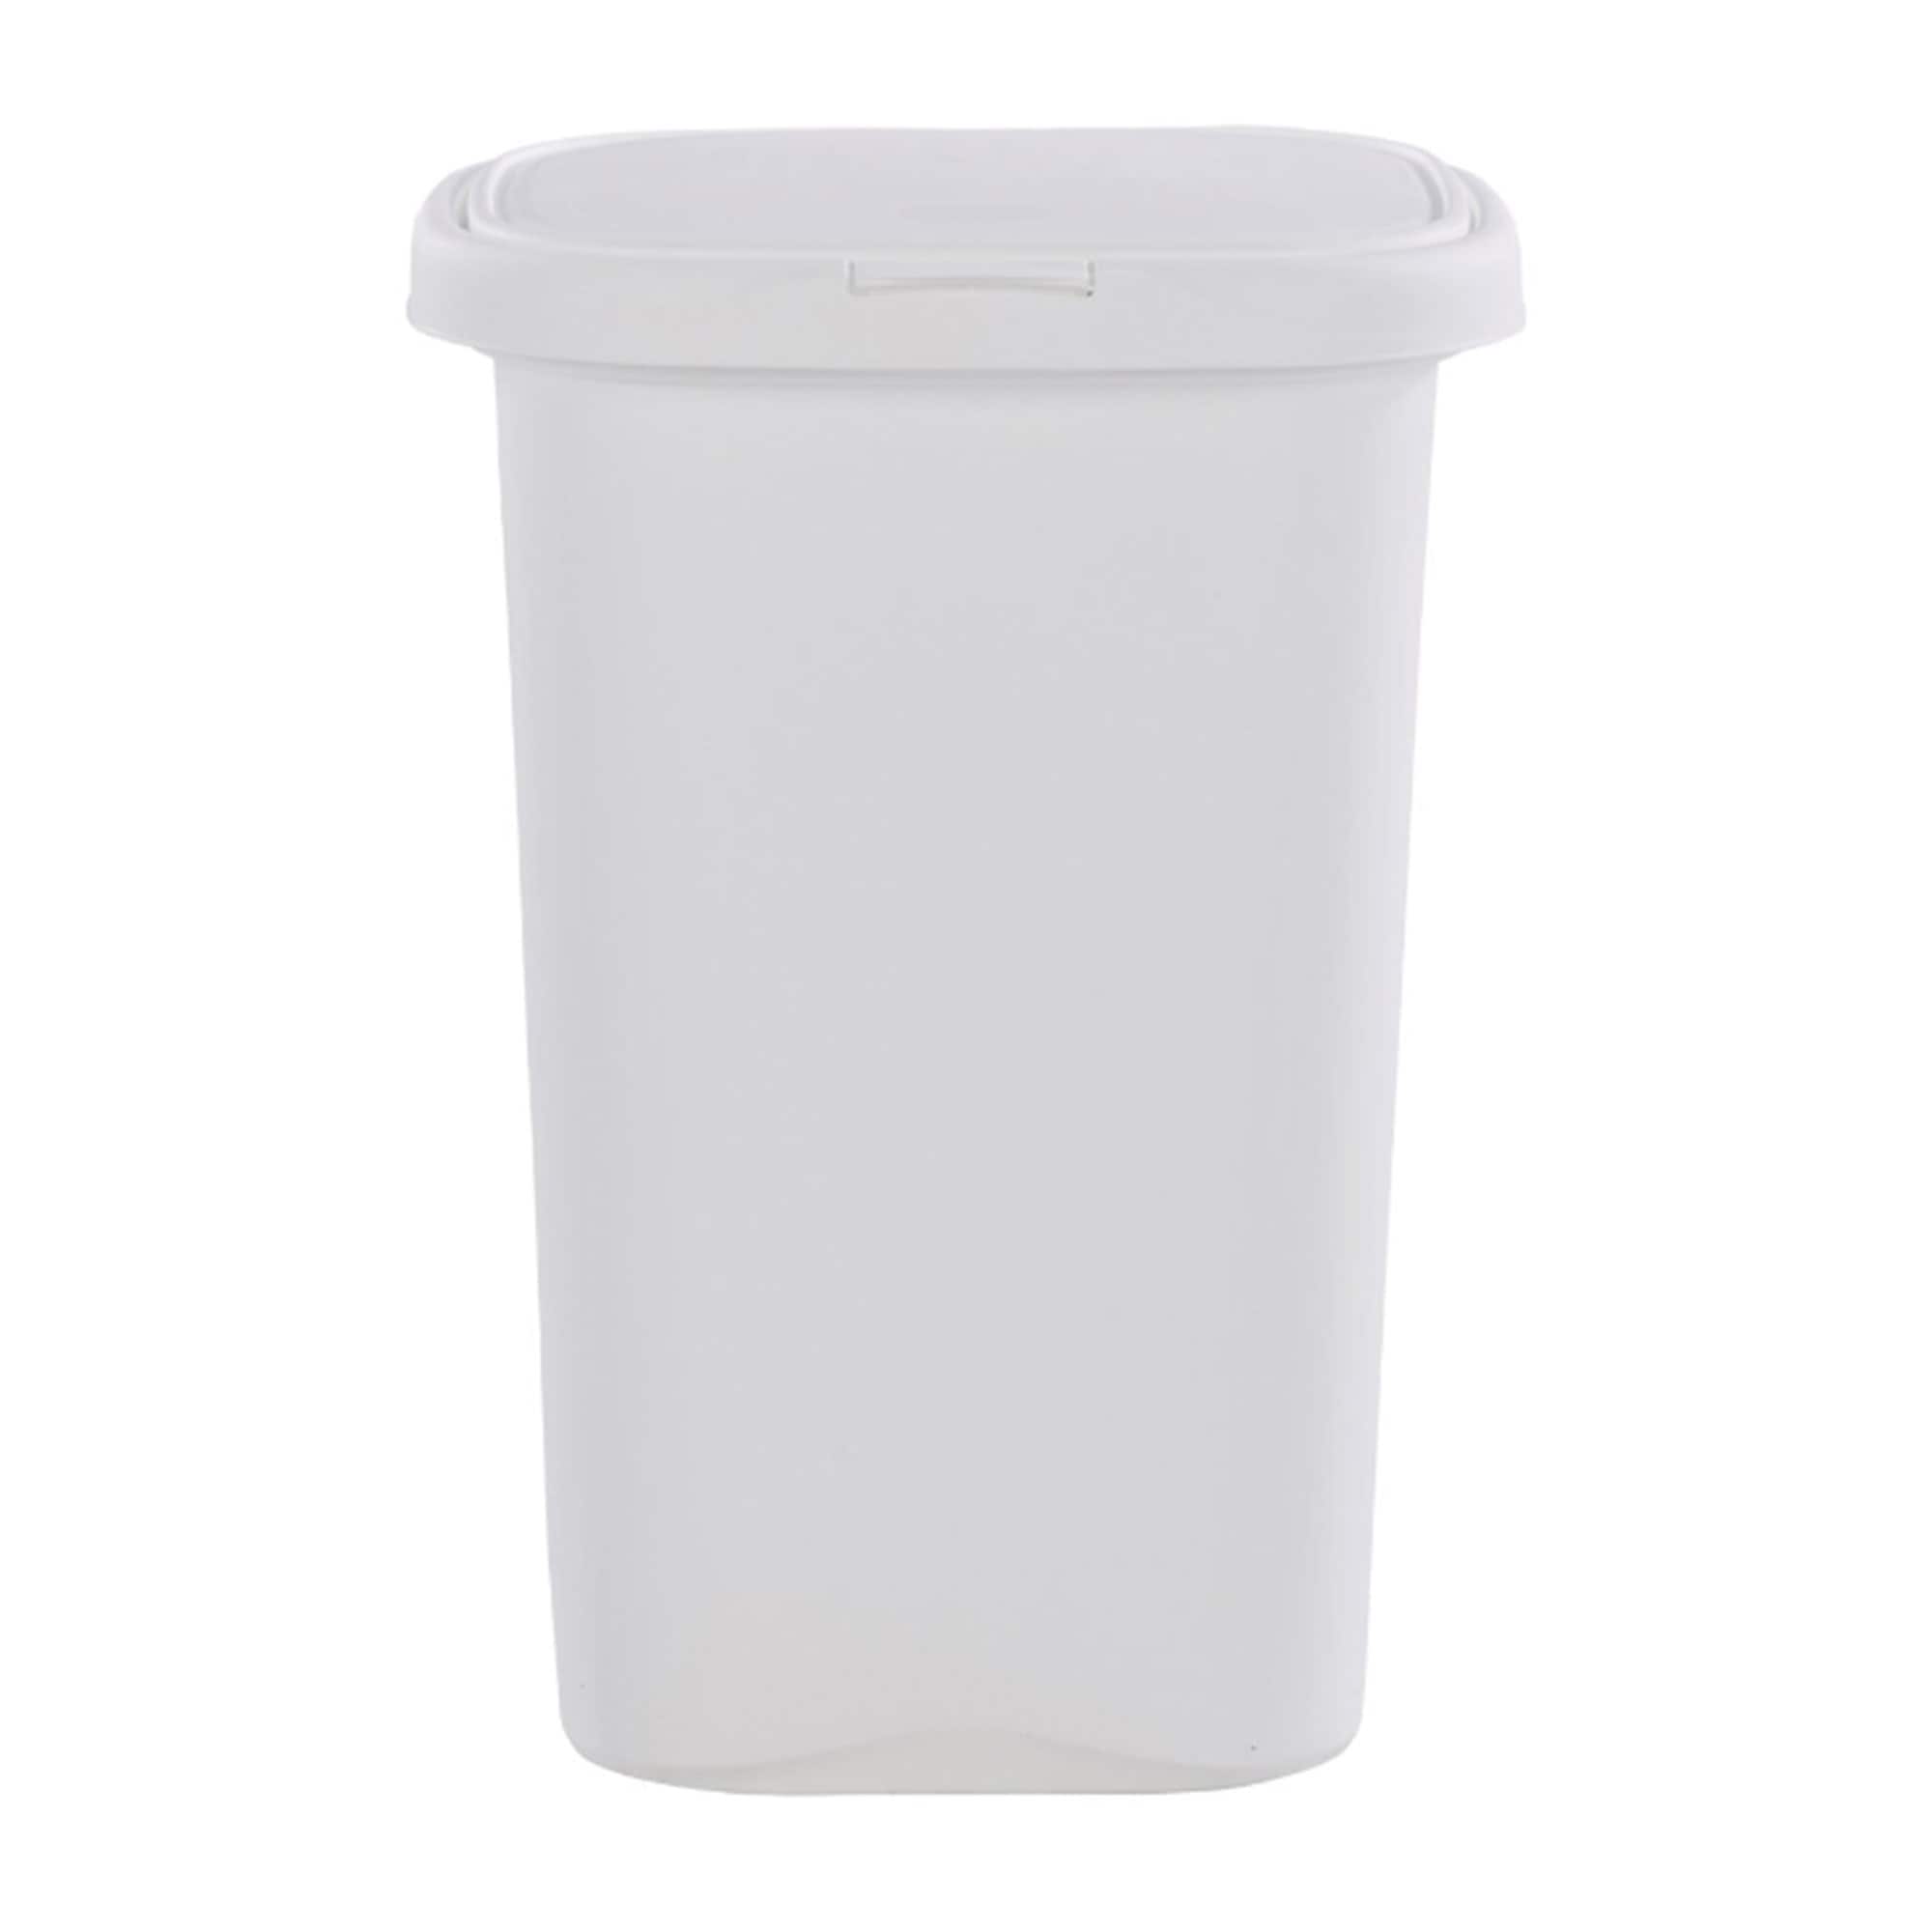 Rubbermaid 13.25 Gallon Rectangular Spring-Top Lid Wastebasket, White (3 Pack)